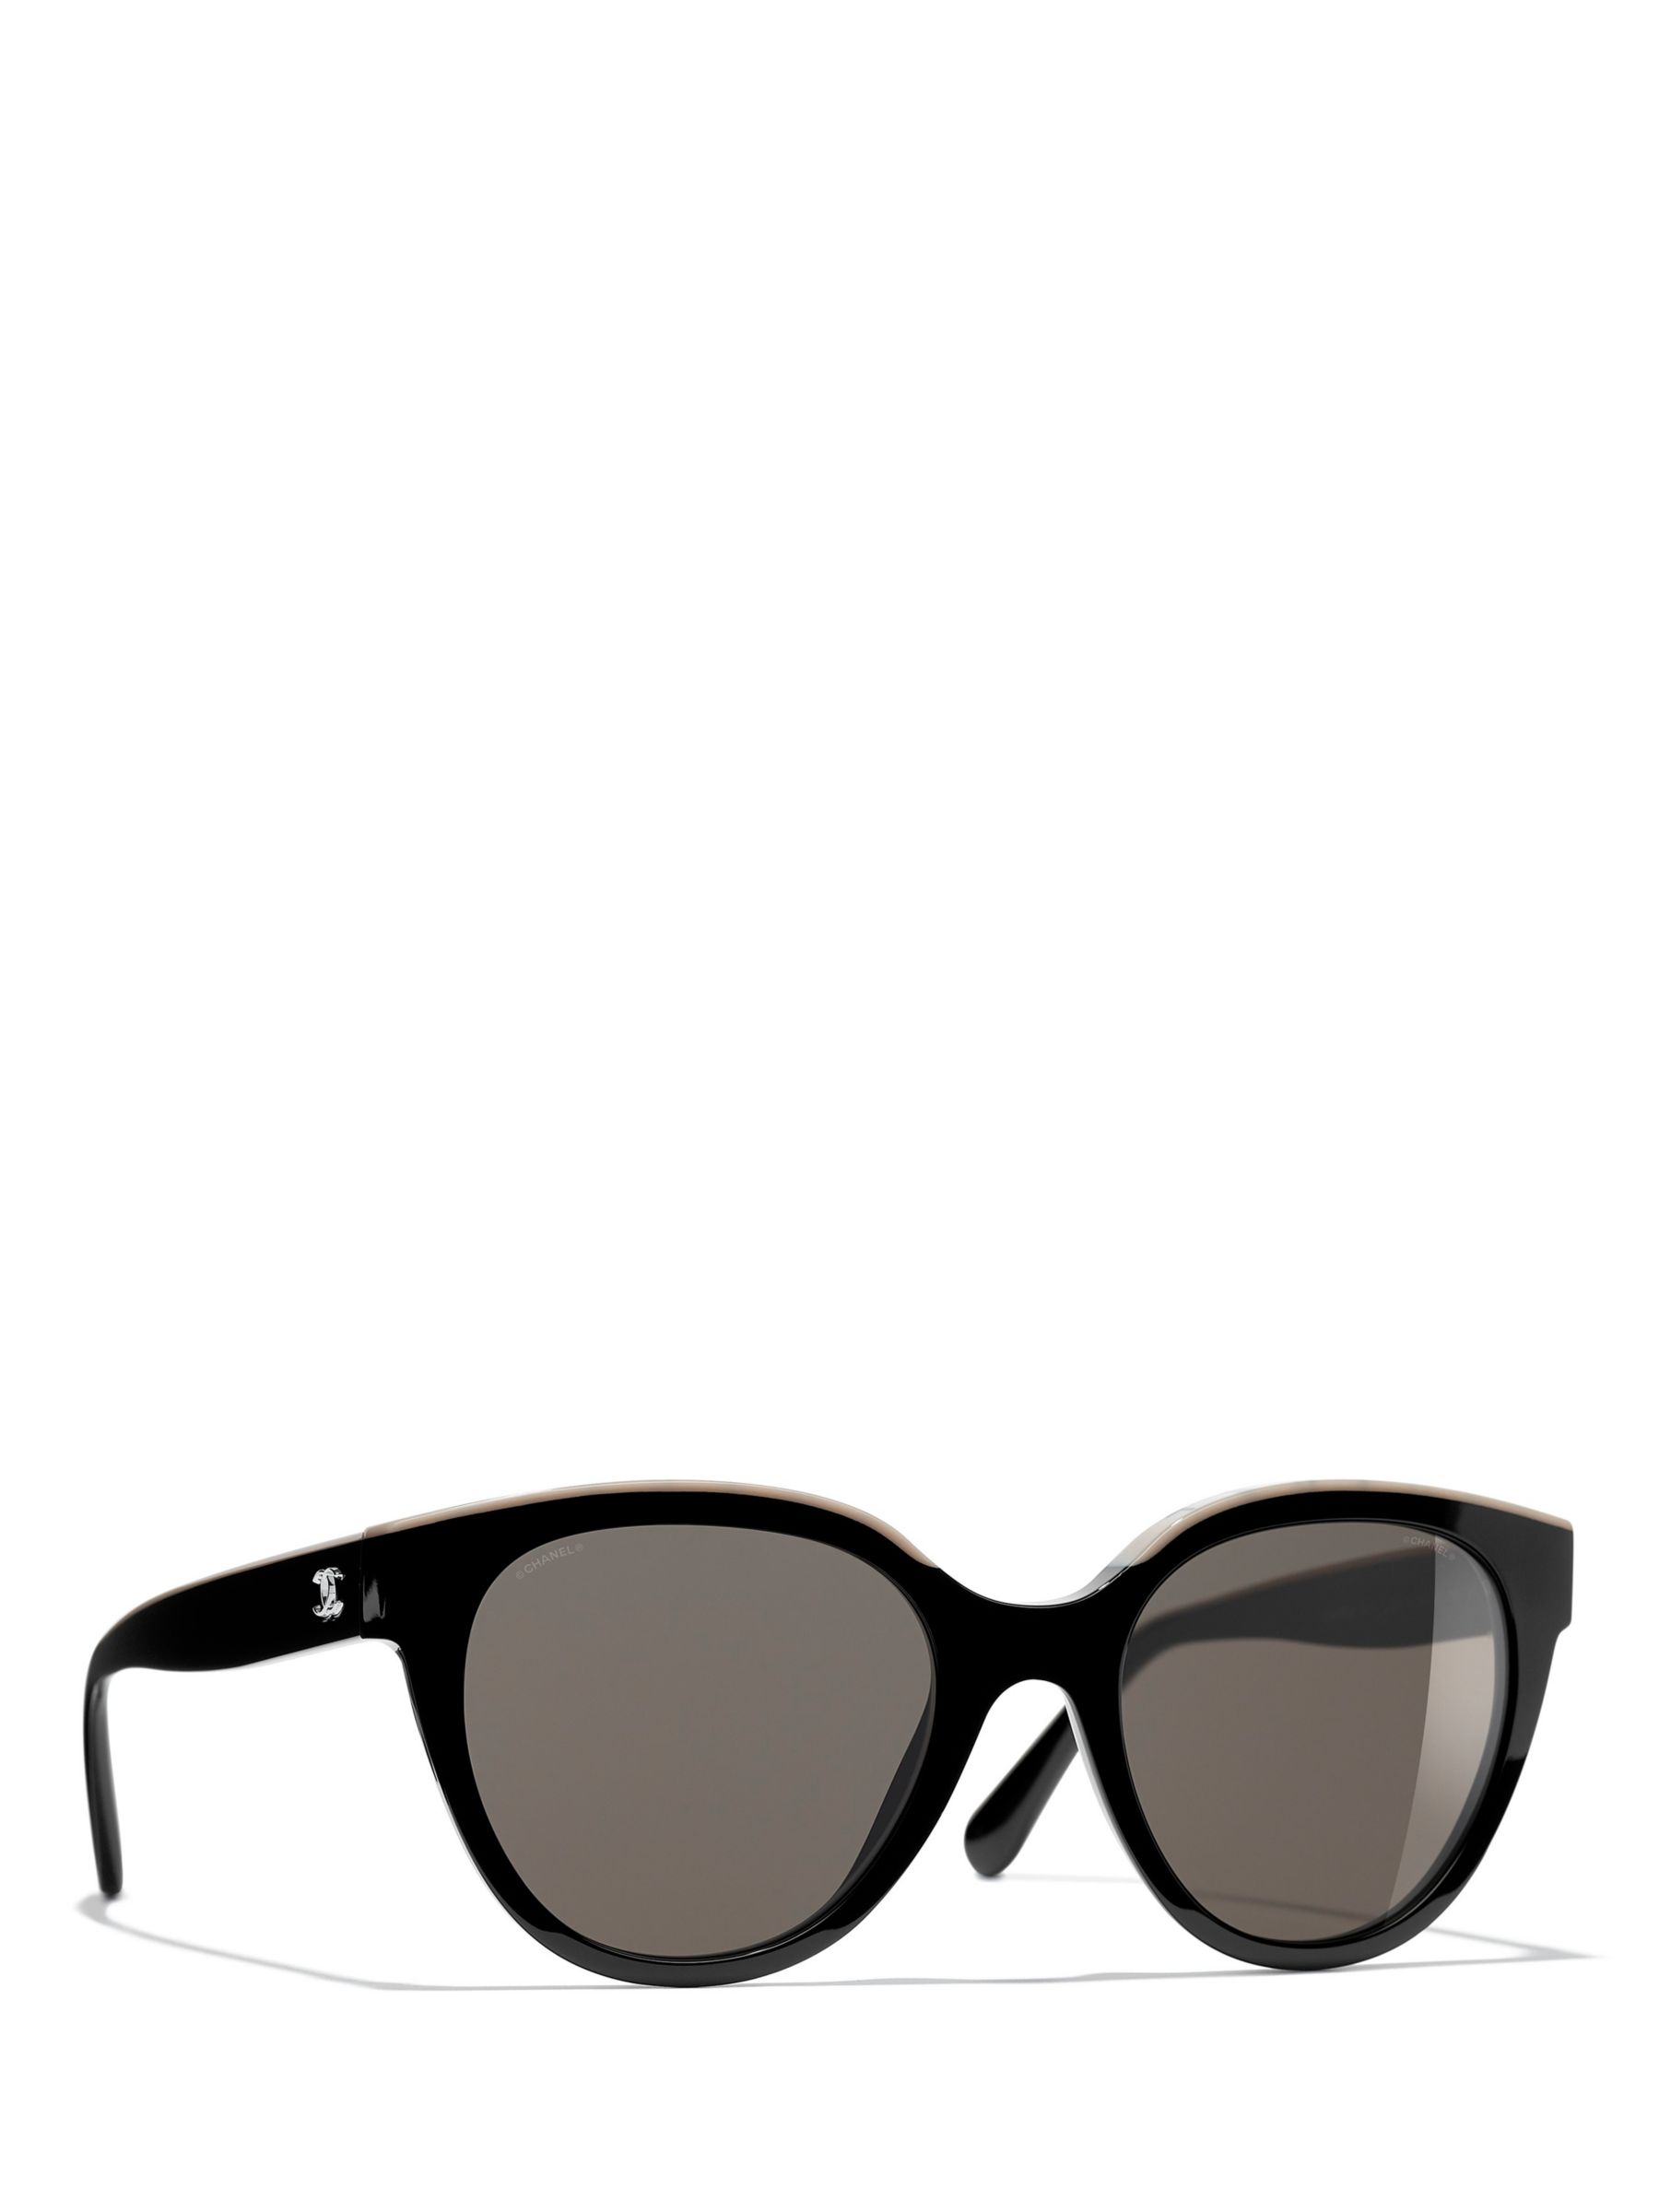 Chanel Glasses - Sunglasses - AliExpress